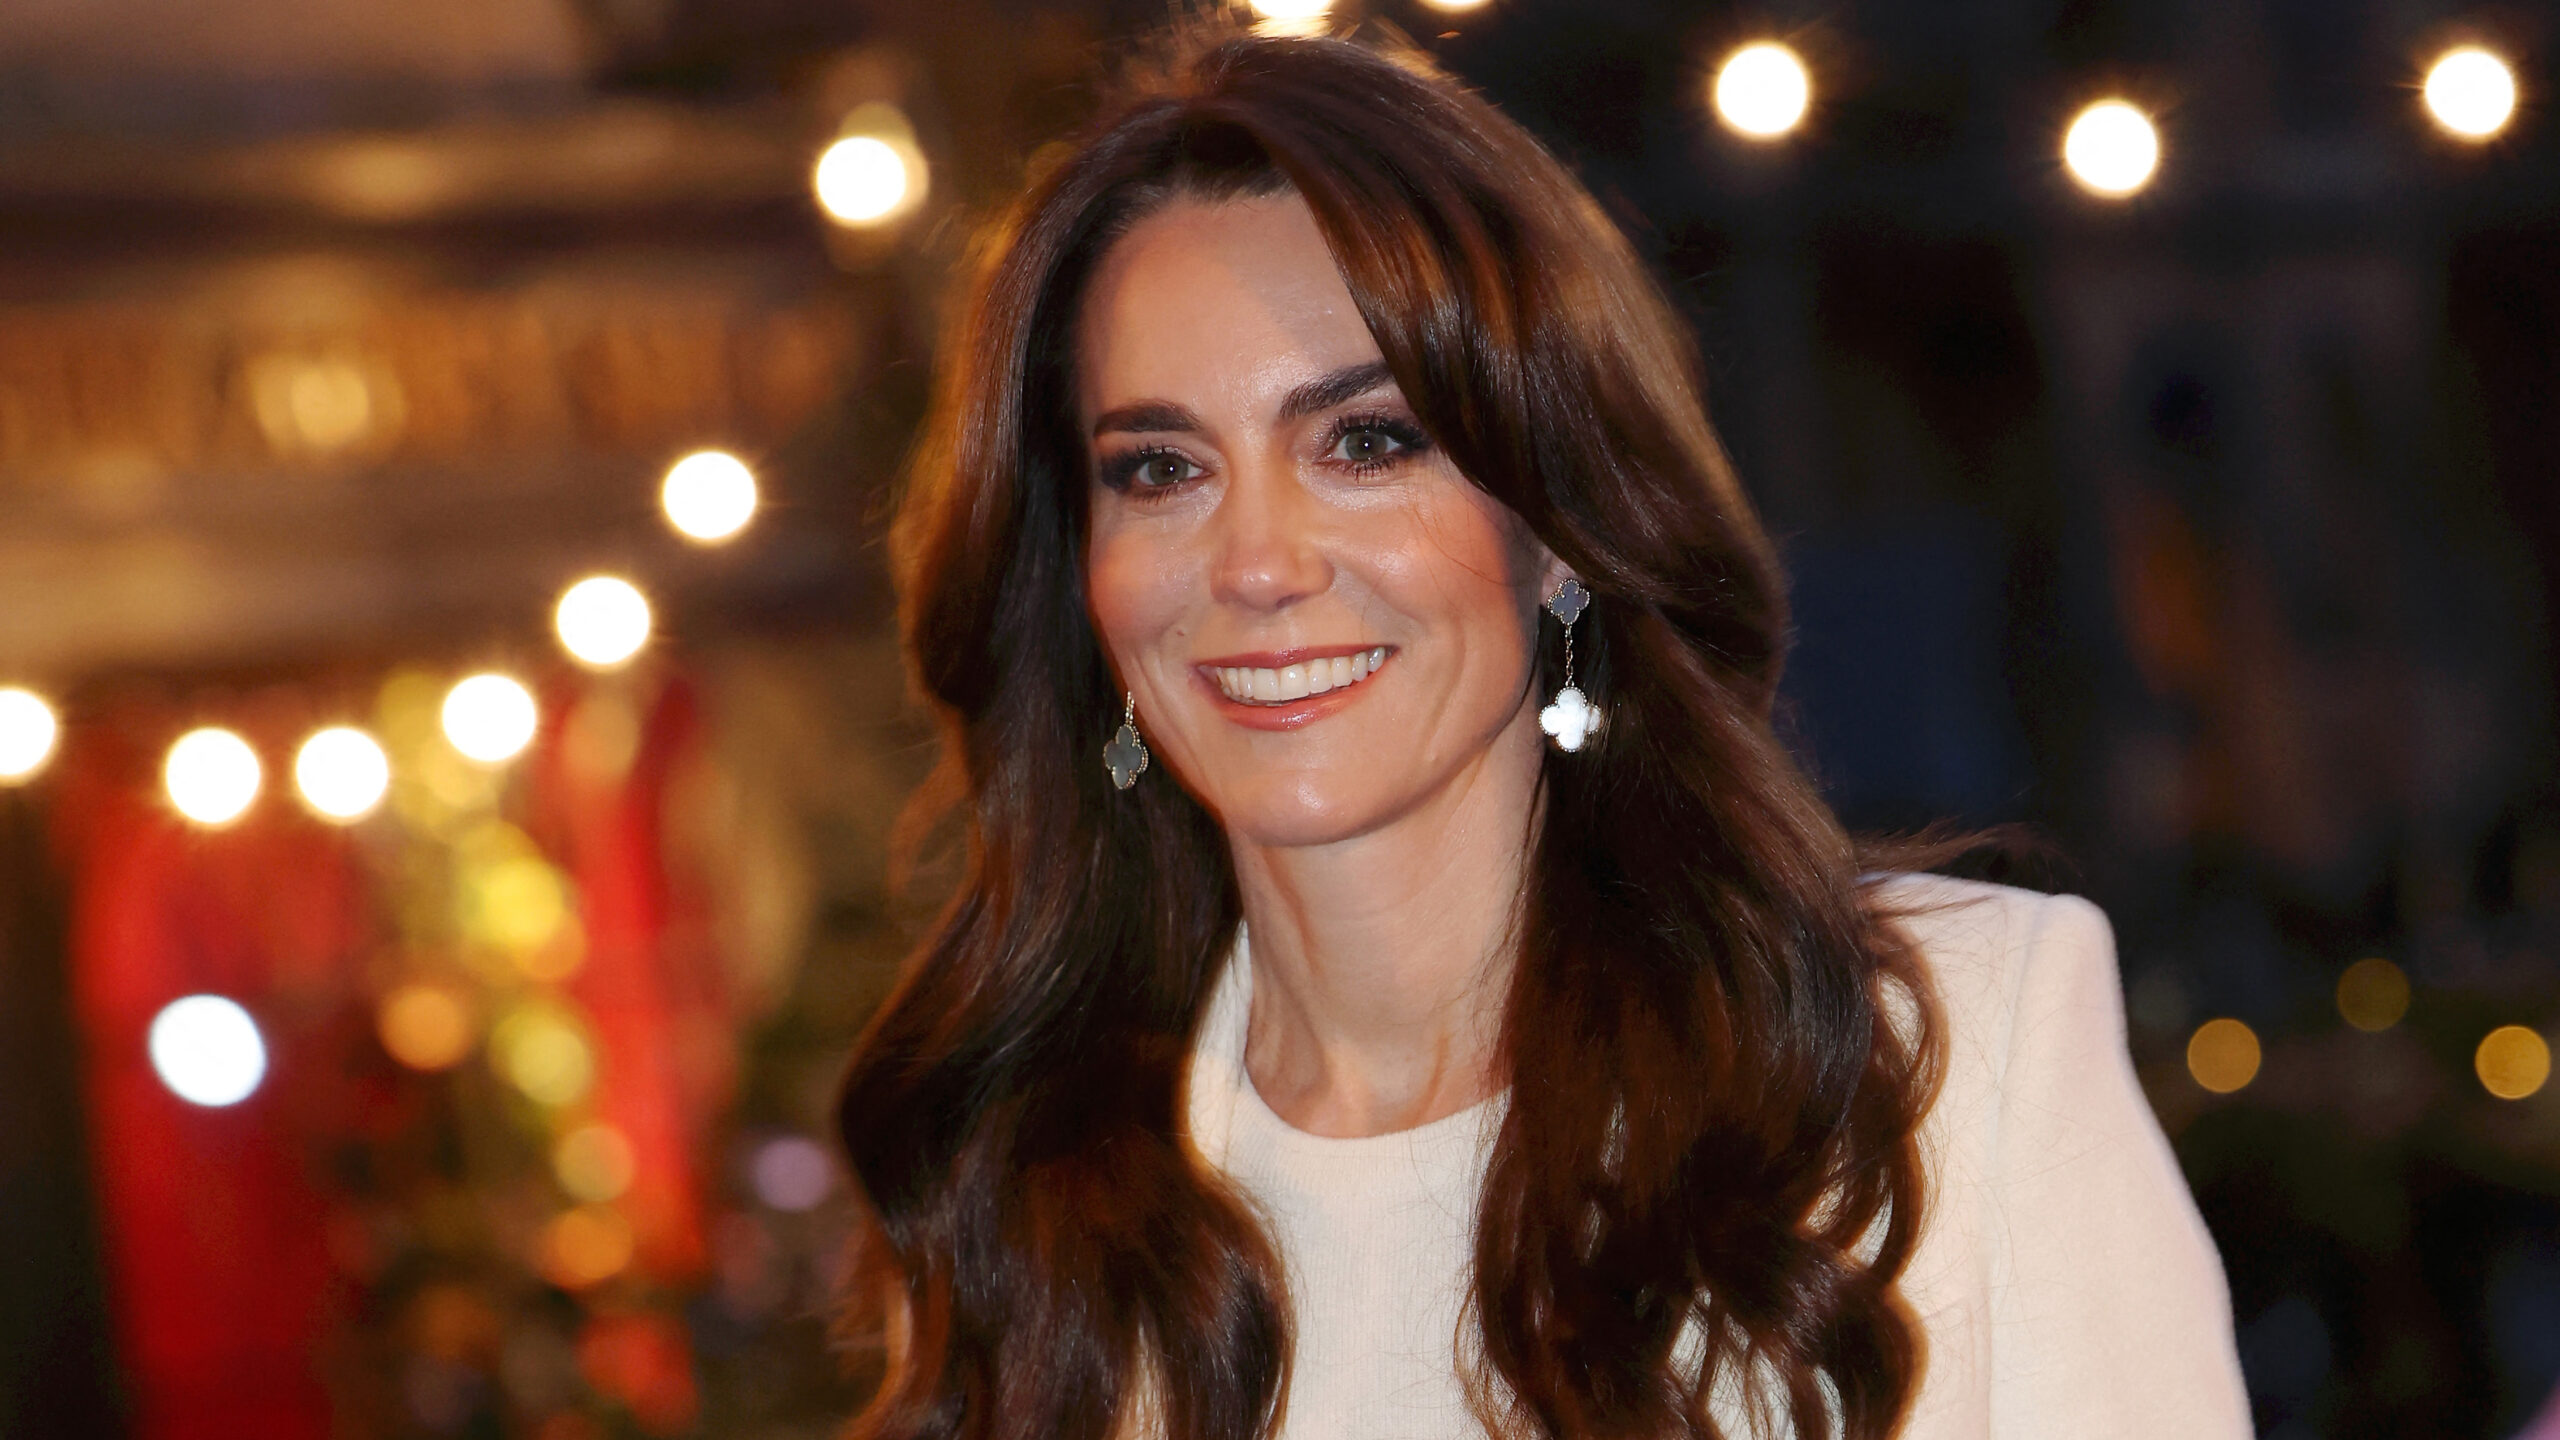 Kate Middleton Provides Update on Cancer Fight